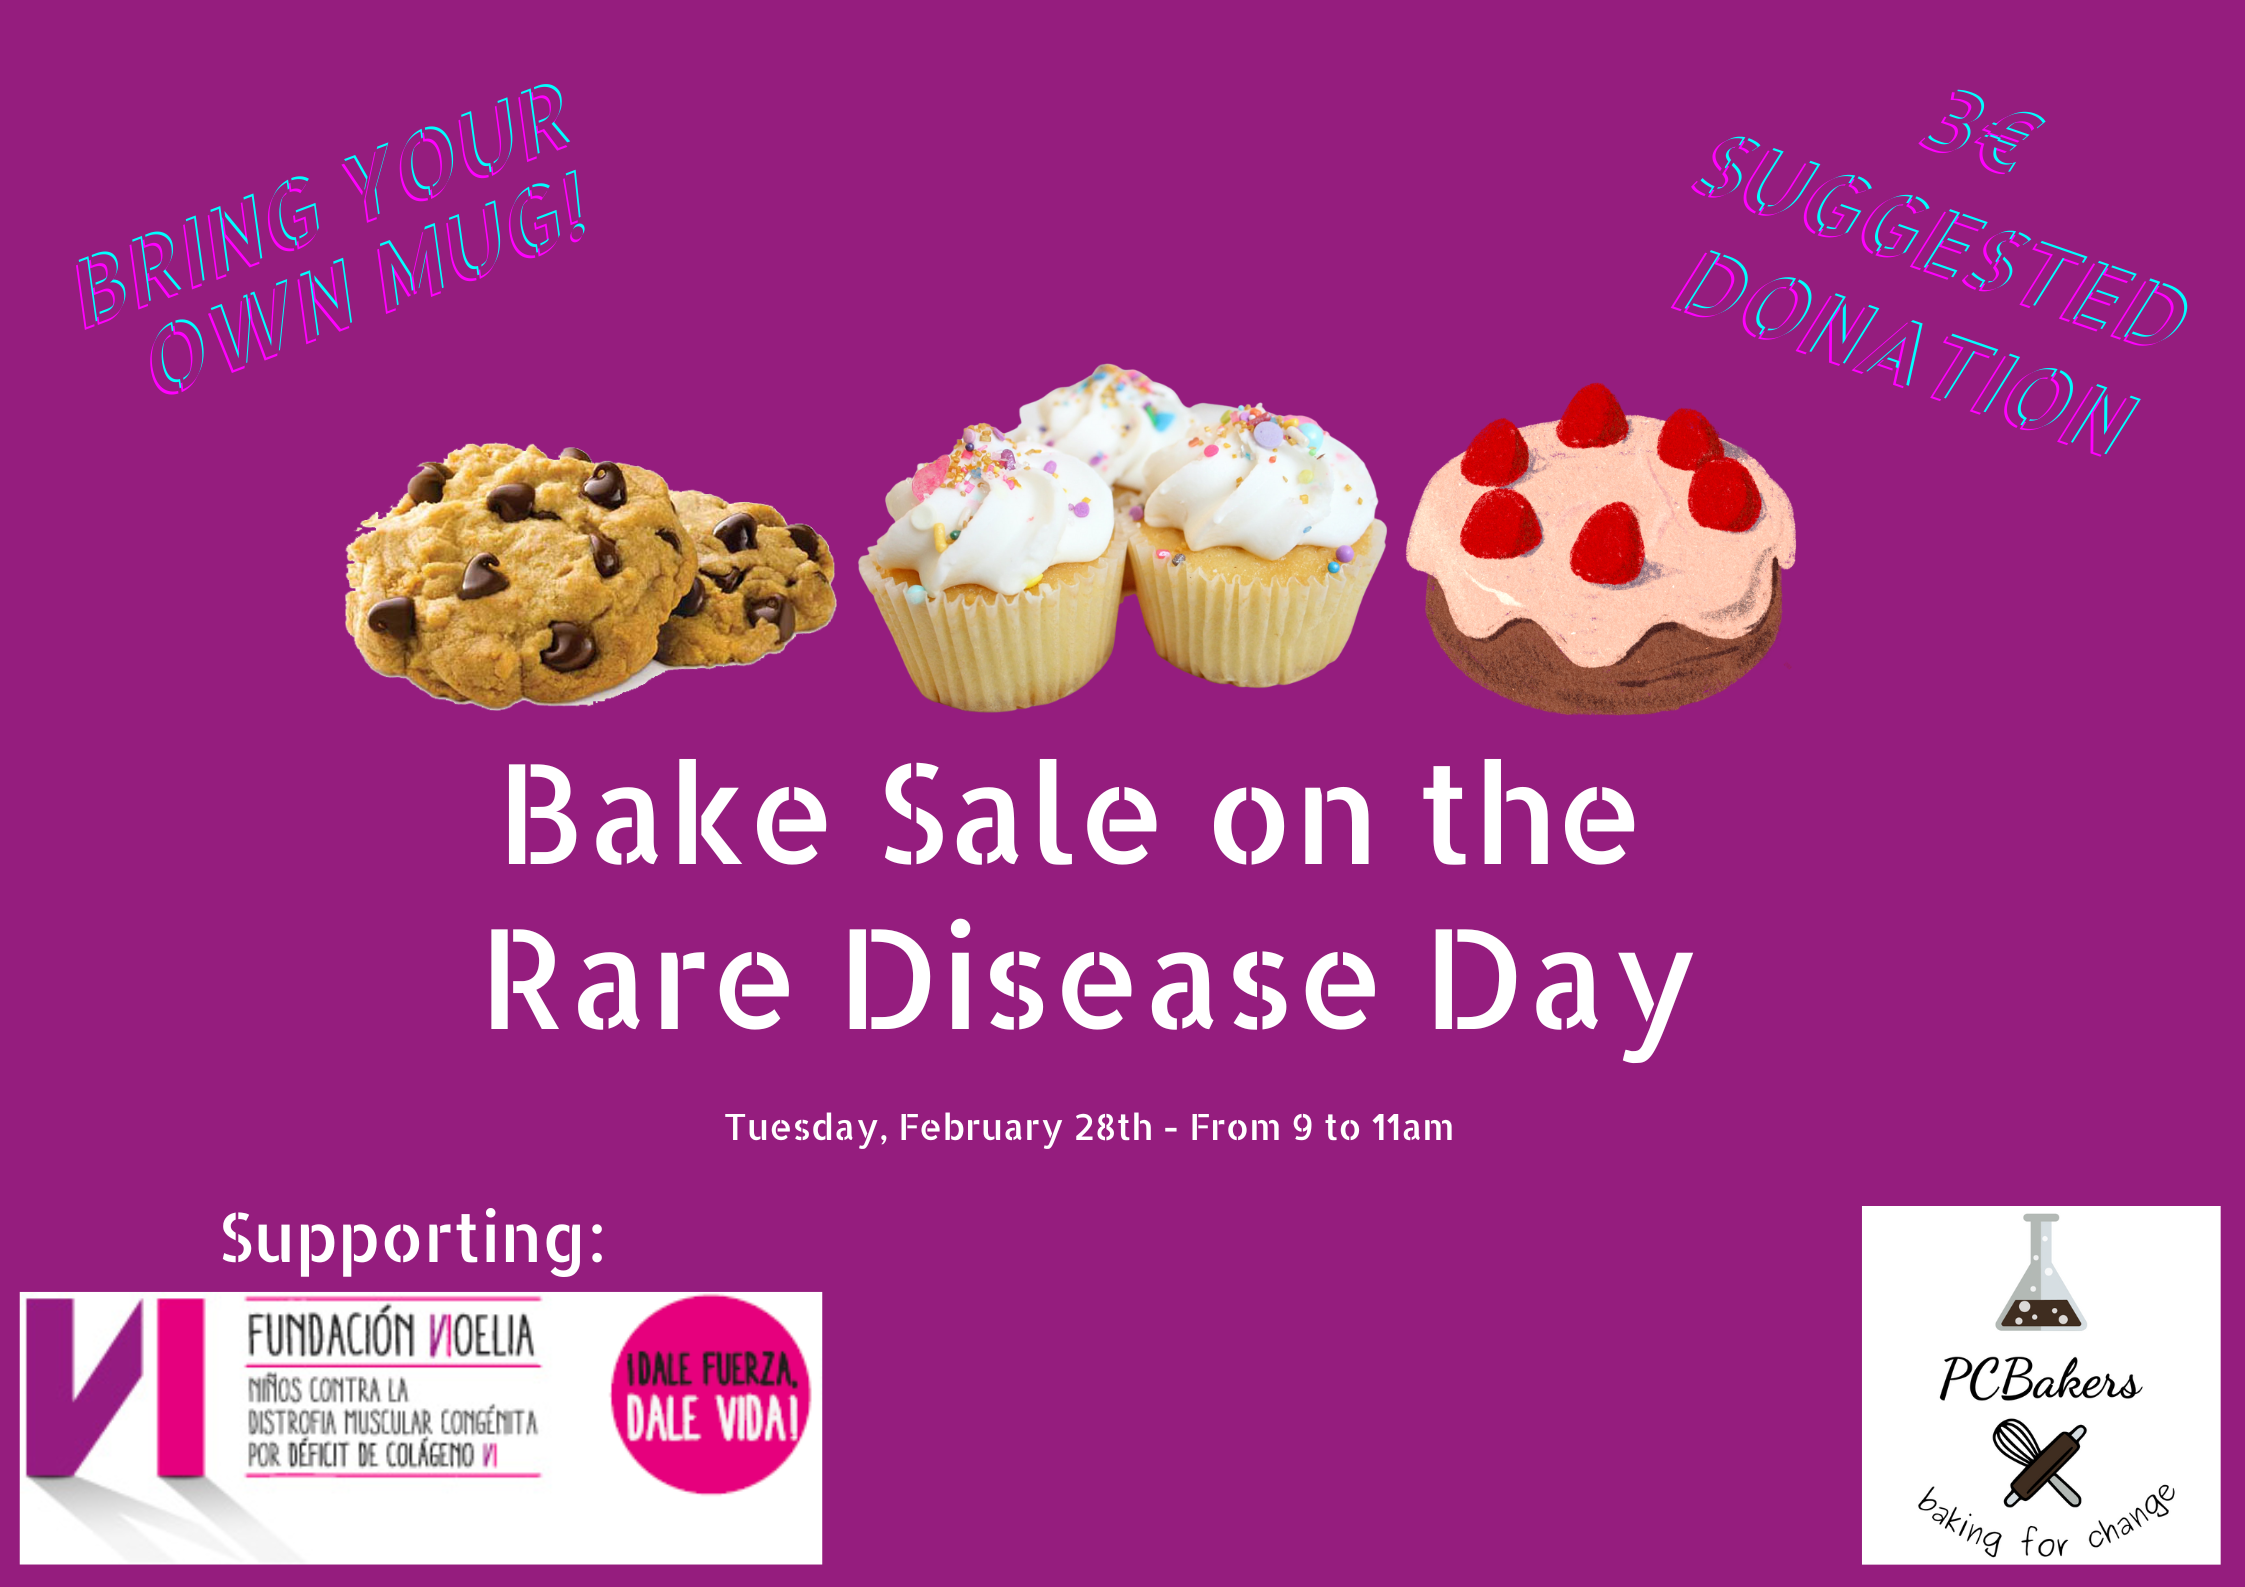 Bake Sale February 28th - Rare Disease Day & Fundació Noelia